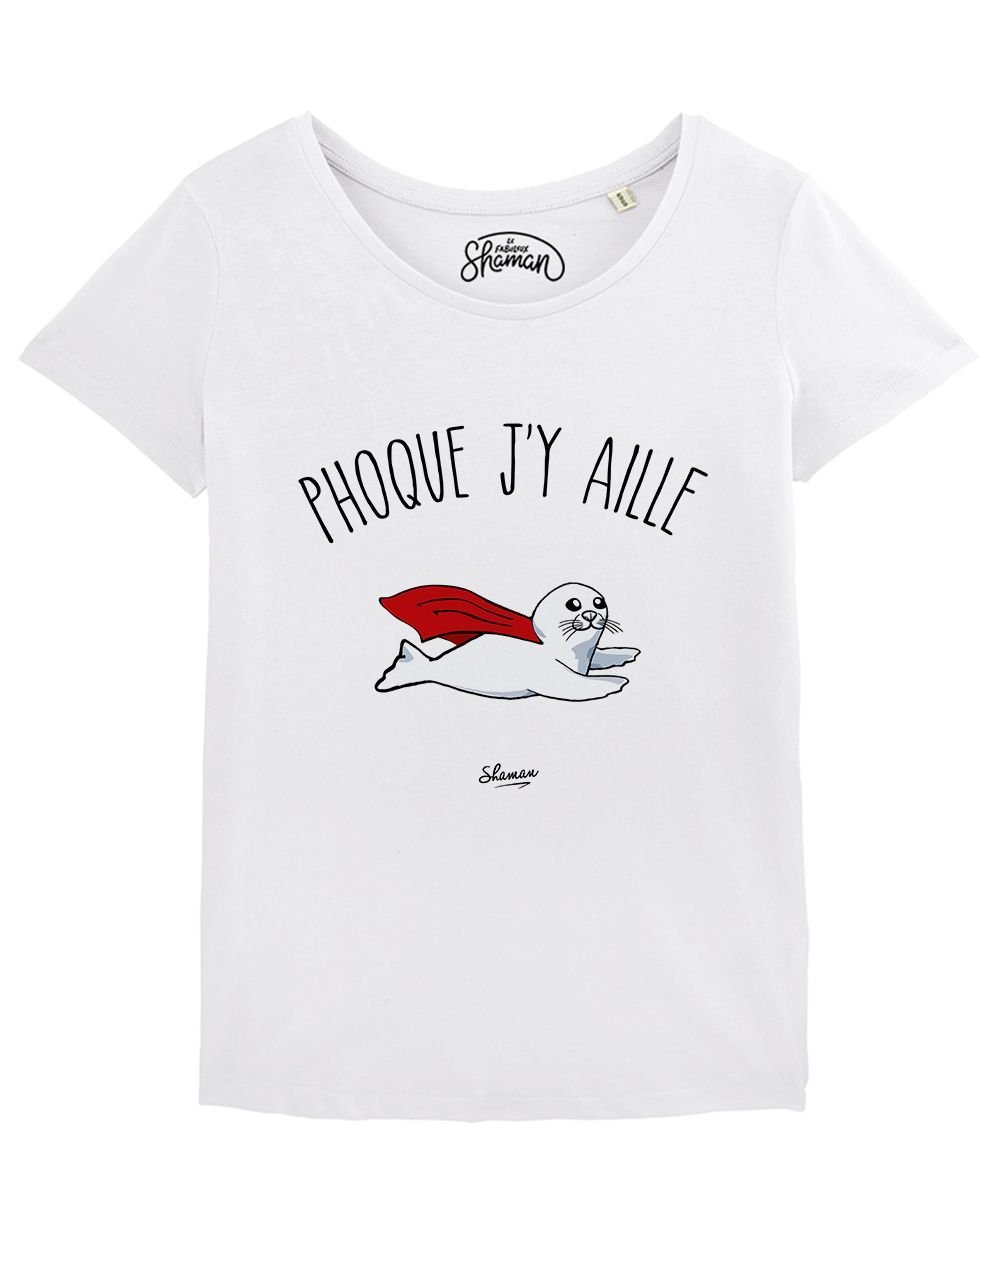 T-shirt "Phoque j'y aille"